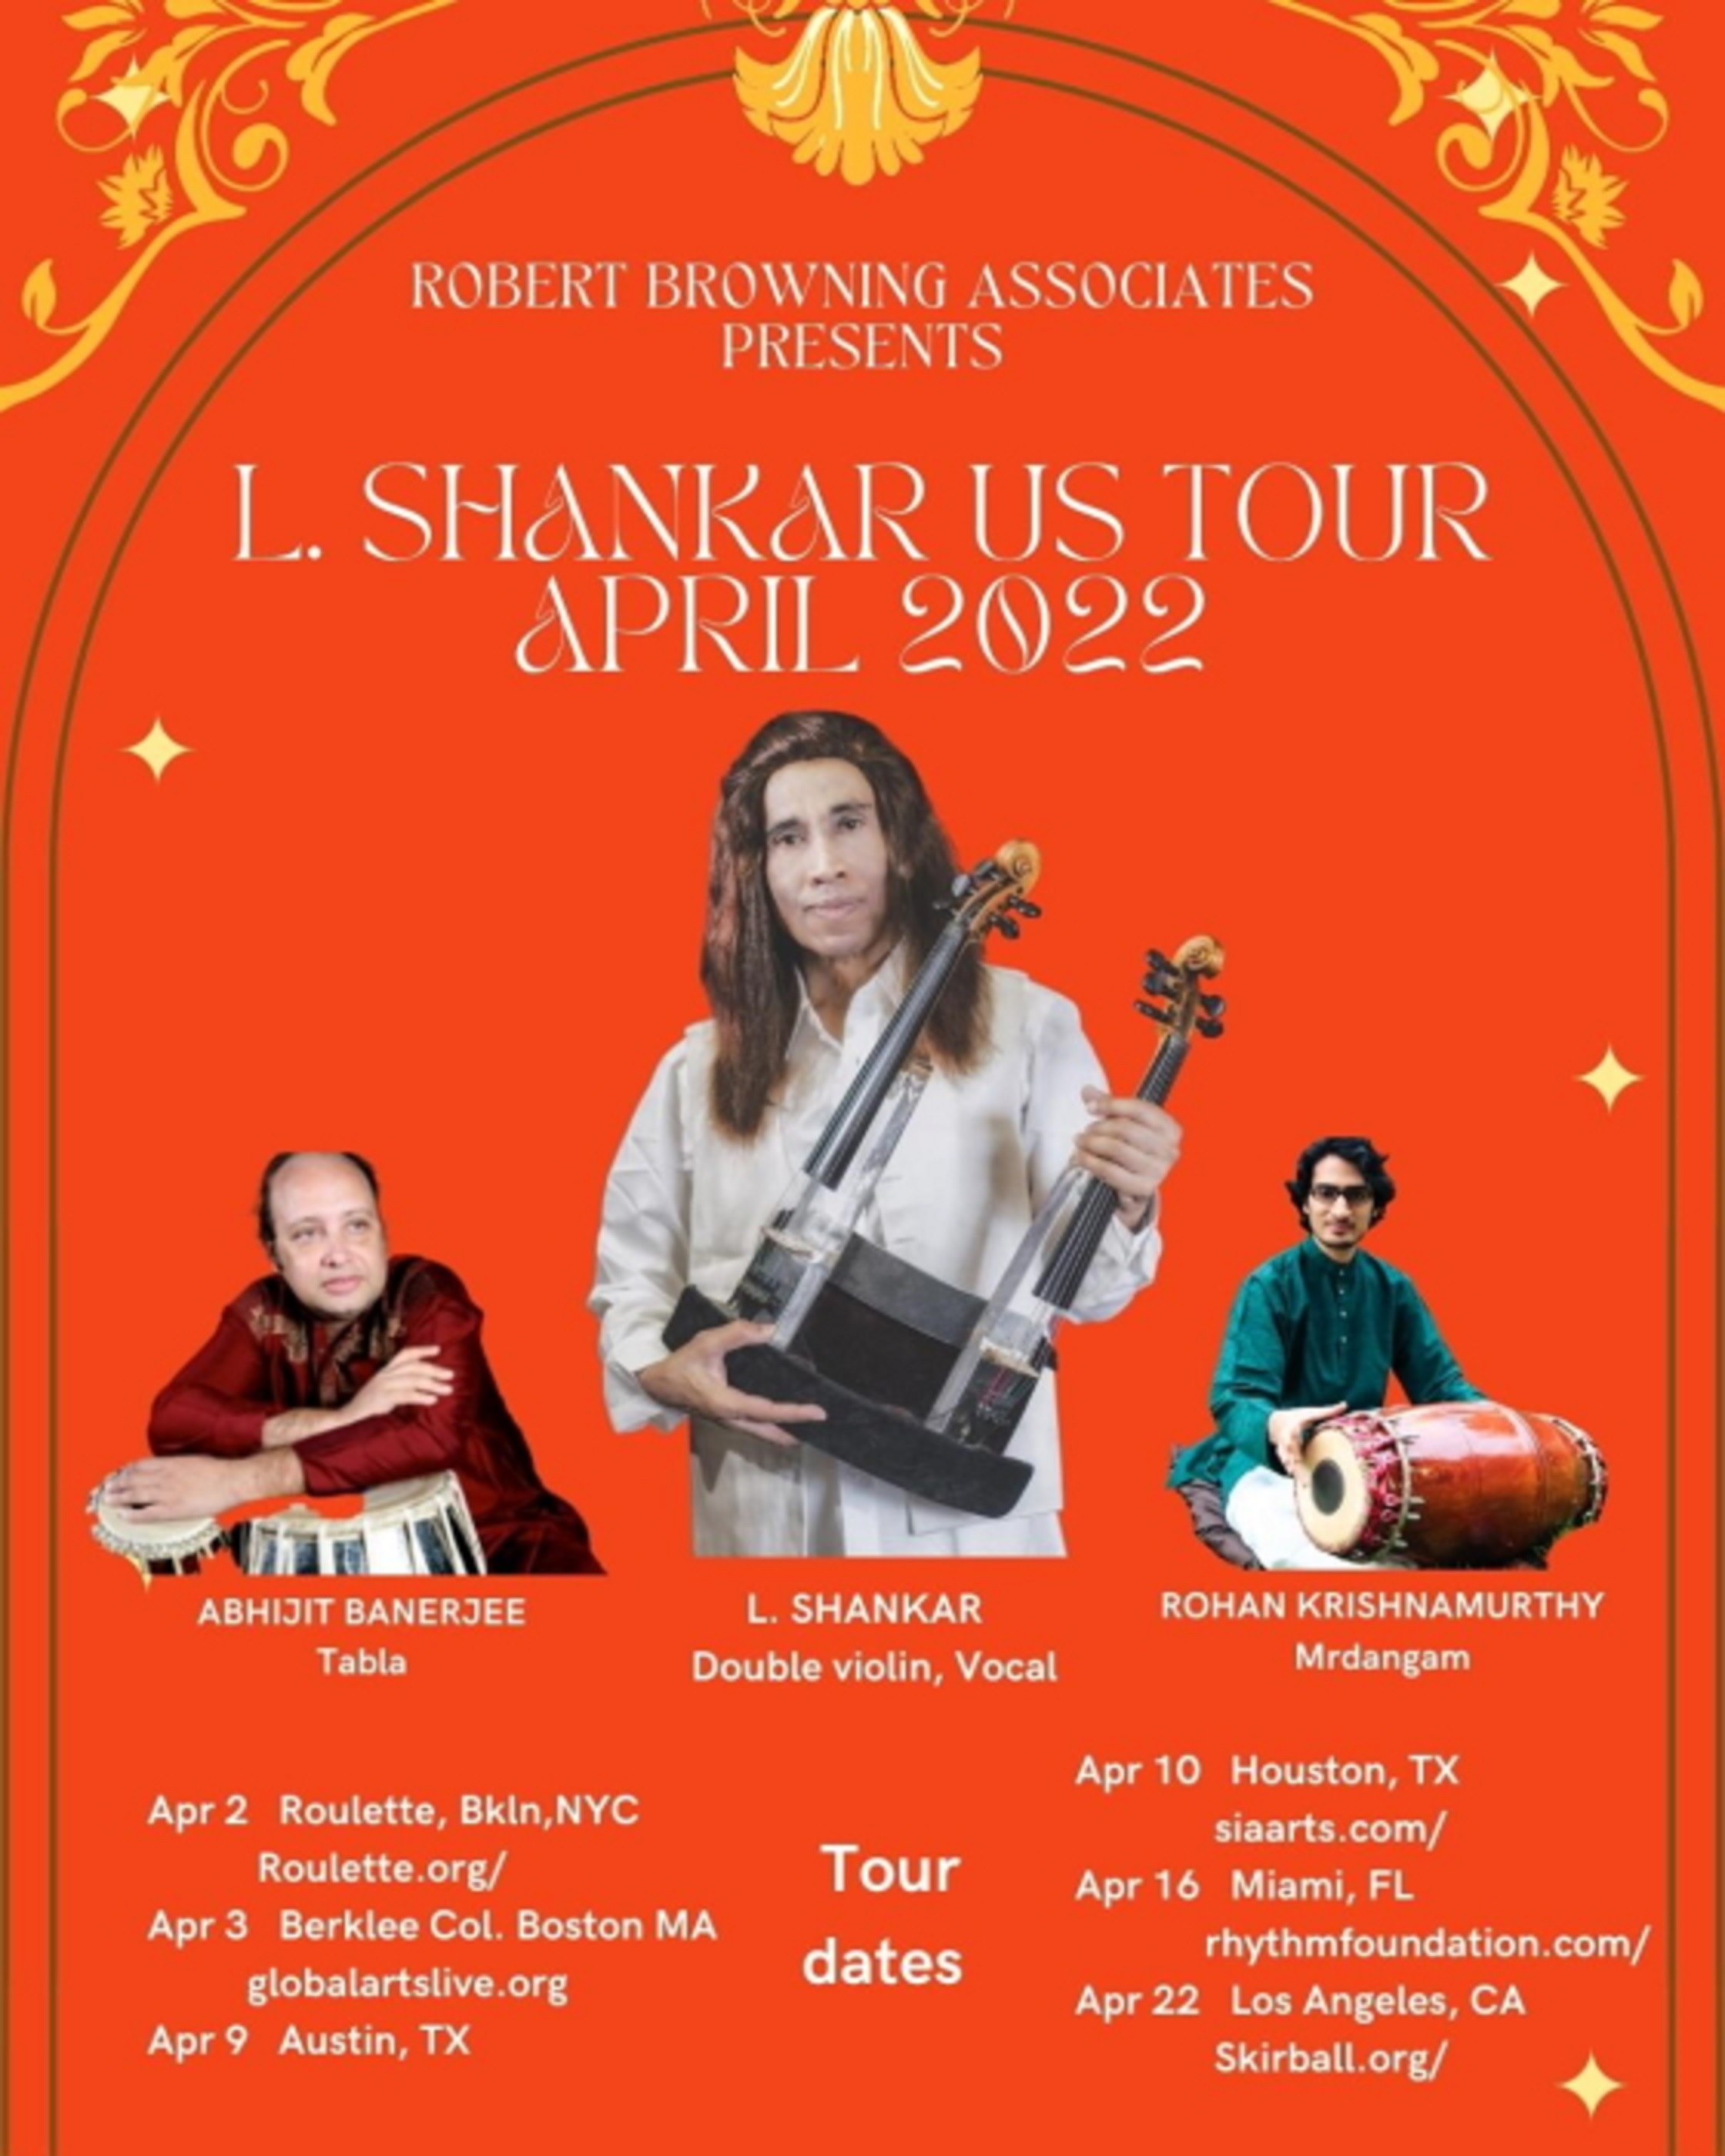 Electric Violin, Vocal Master L. SHANKAR To Play Select US Shows April 2022